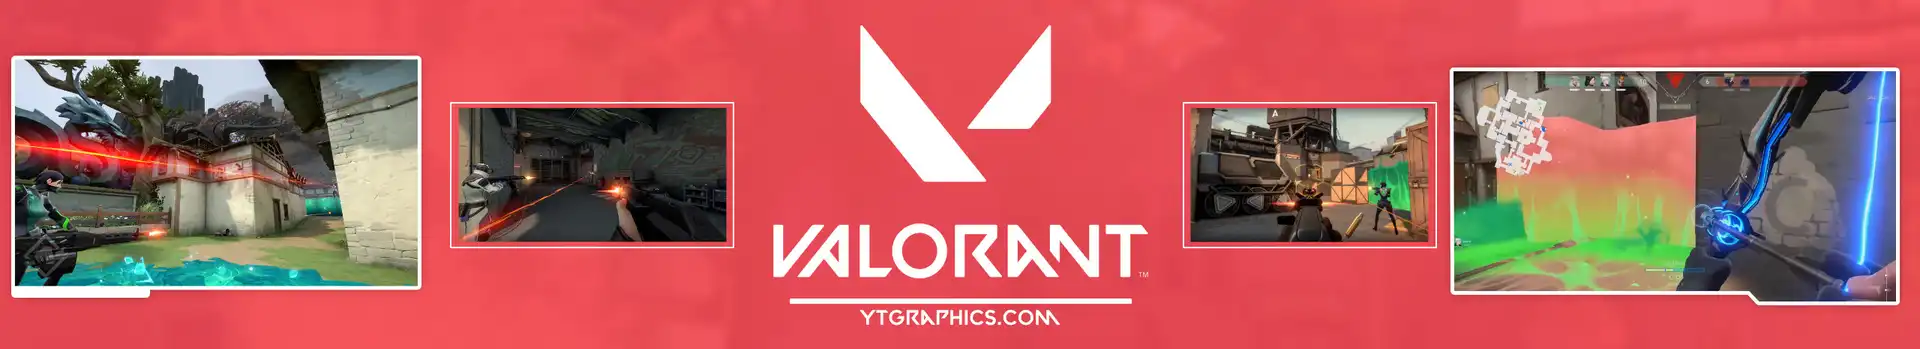 VALORANT preview